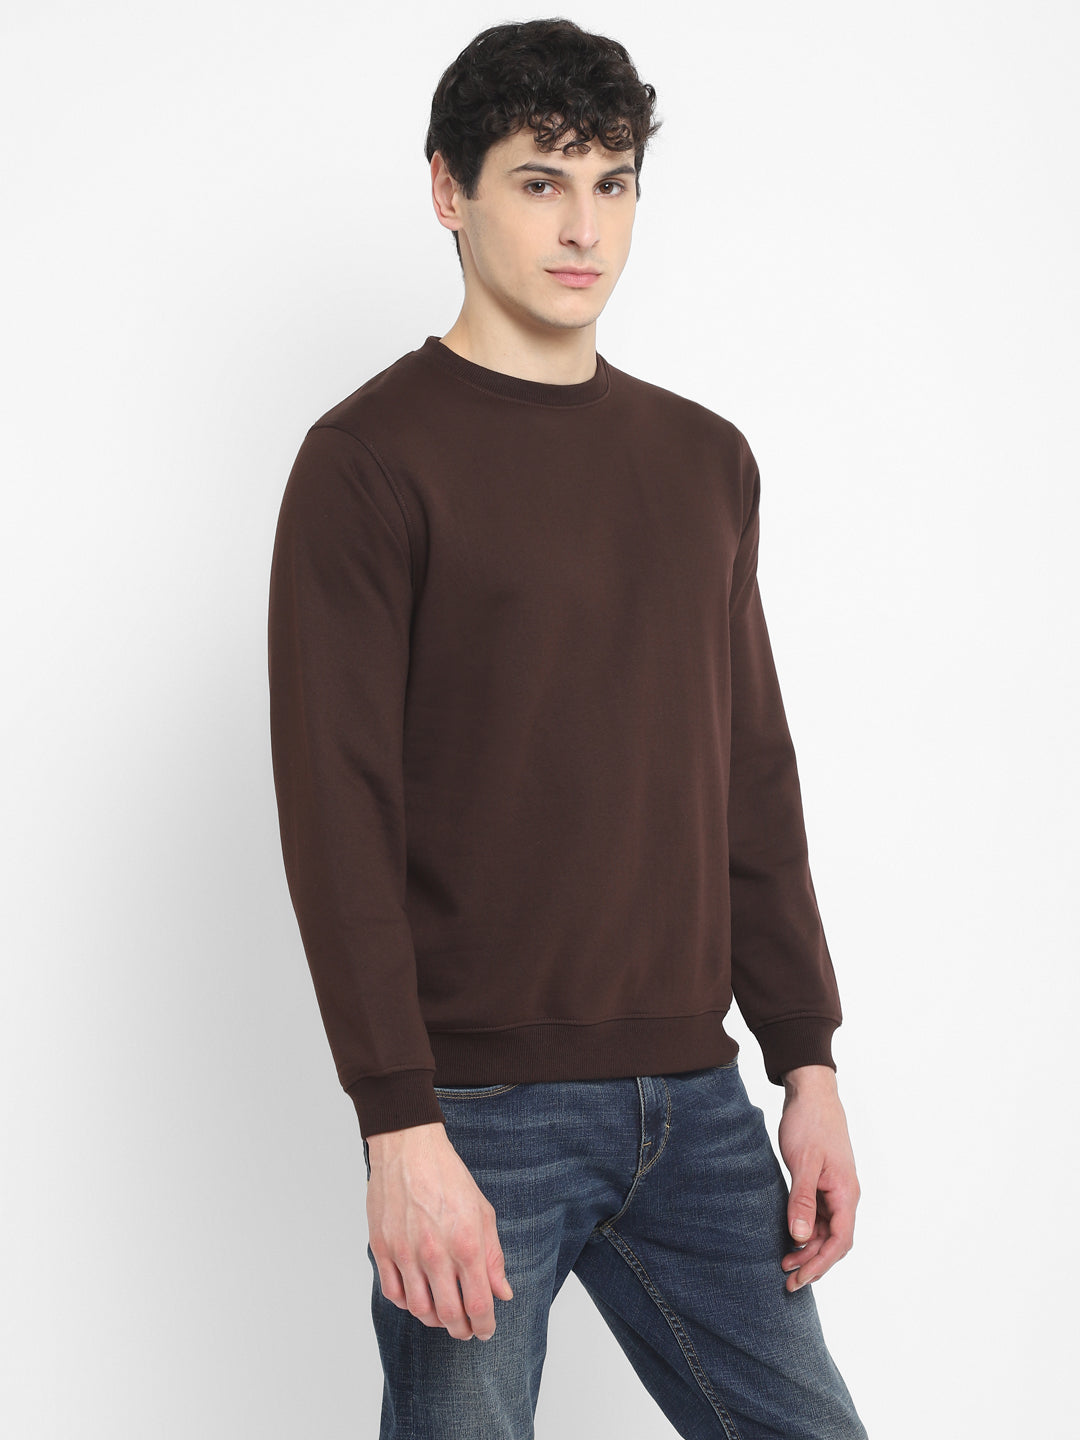 Round Neck Sweatshirt For Men - Chocolate Plum